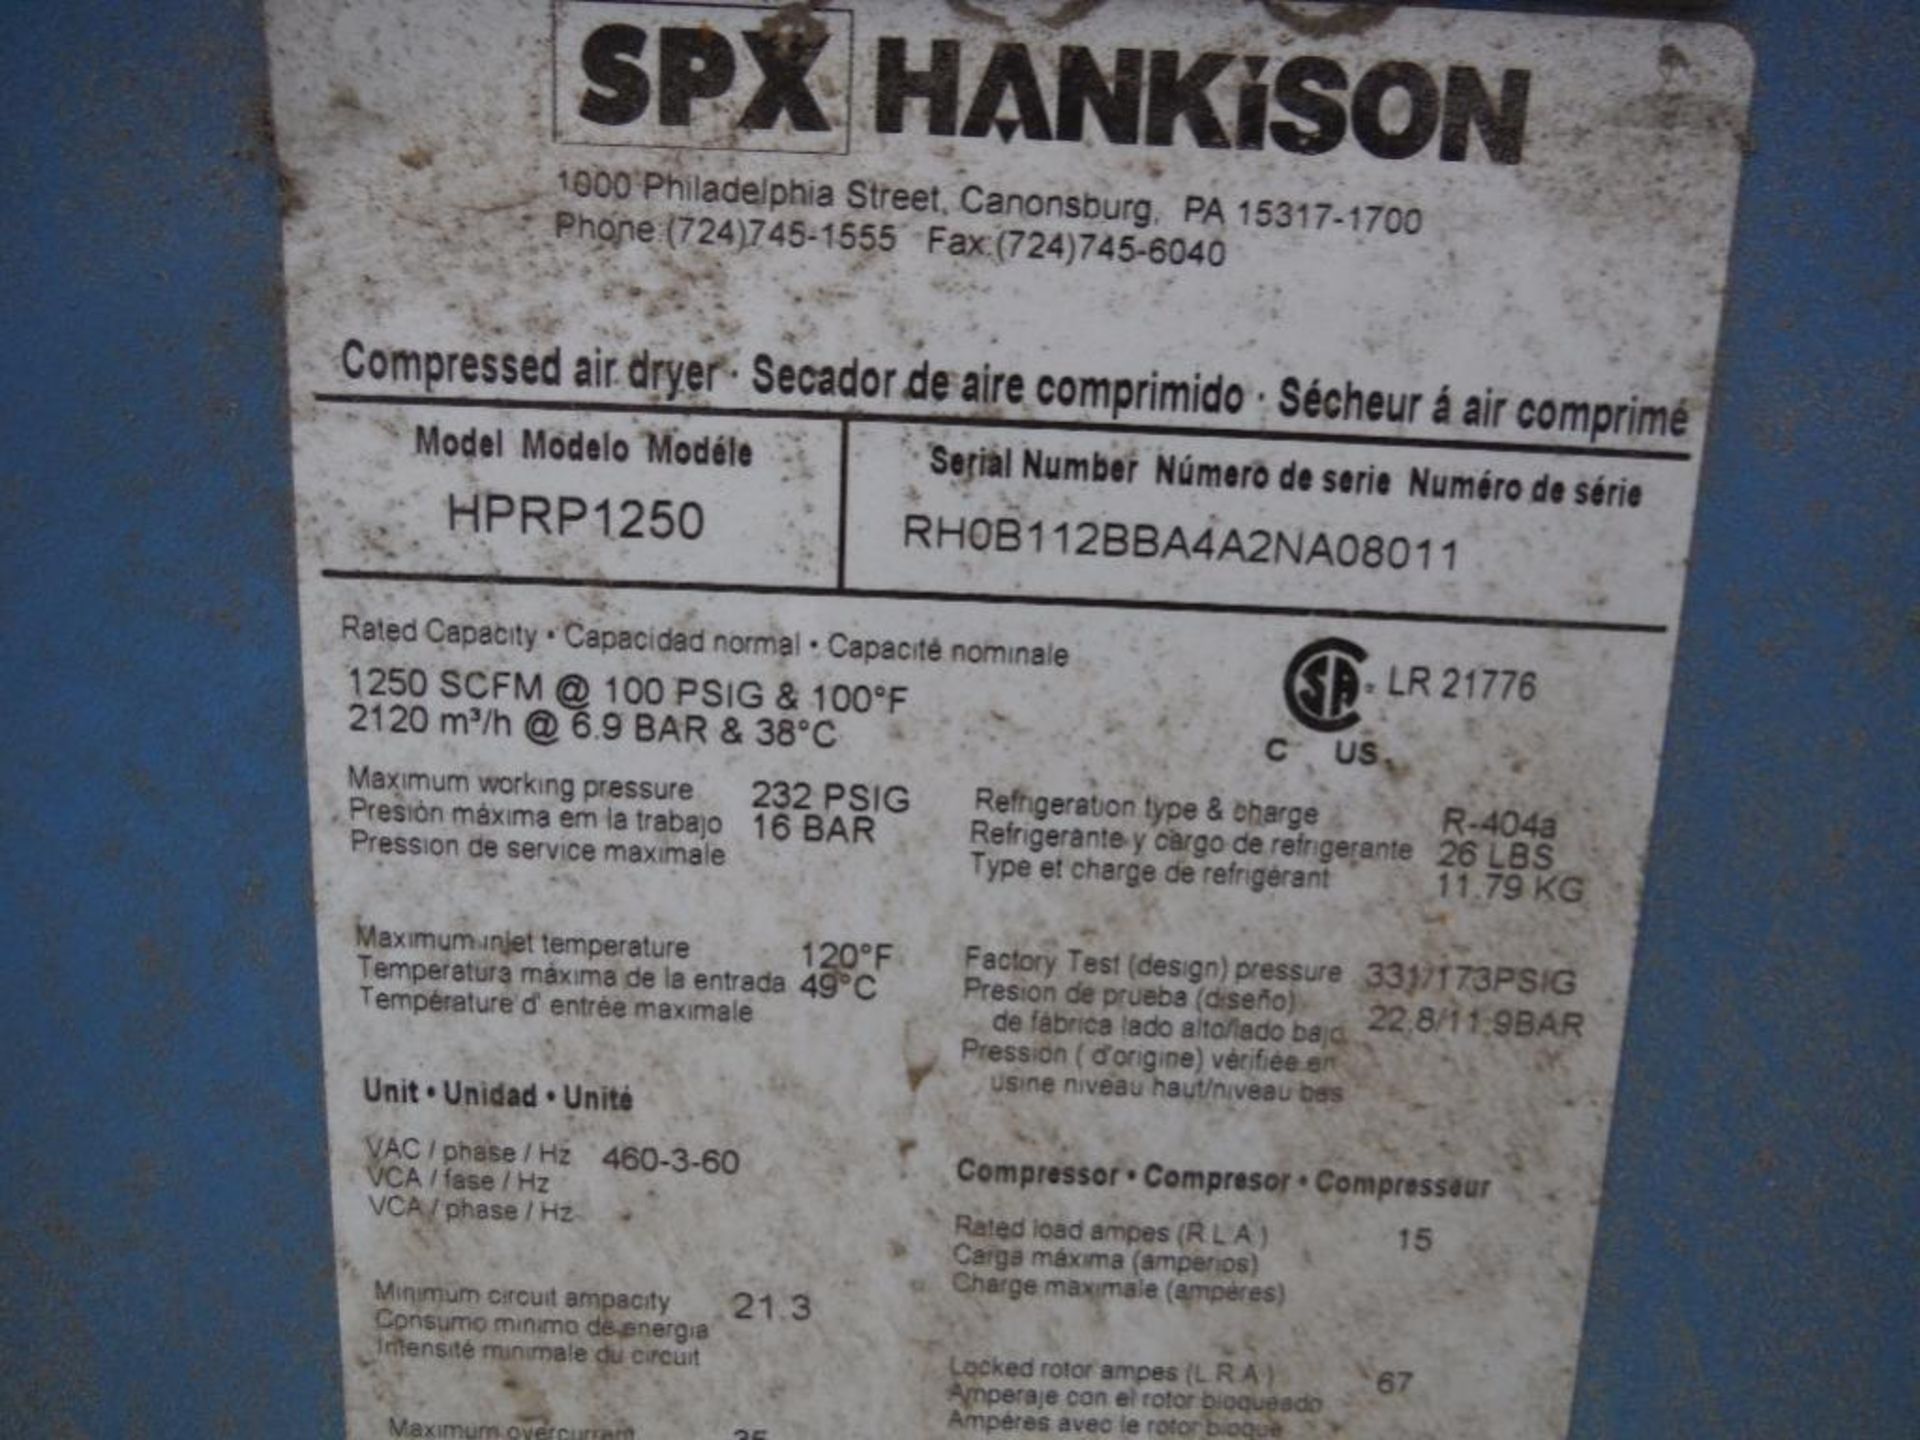 SPX Hankinson air dryer, Model HPRP1250, SN RH0B112BBA4A2NA08011, 1250 scfm @100 psig & 100 F, 15, - Image 5 of 5